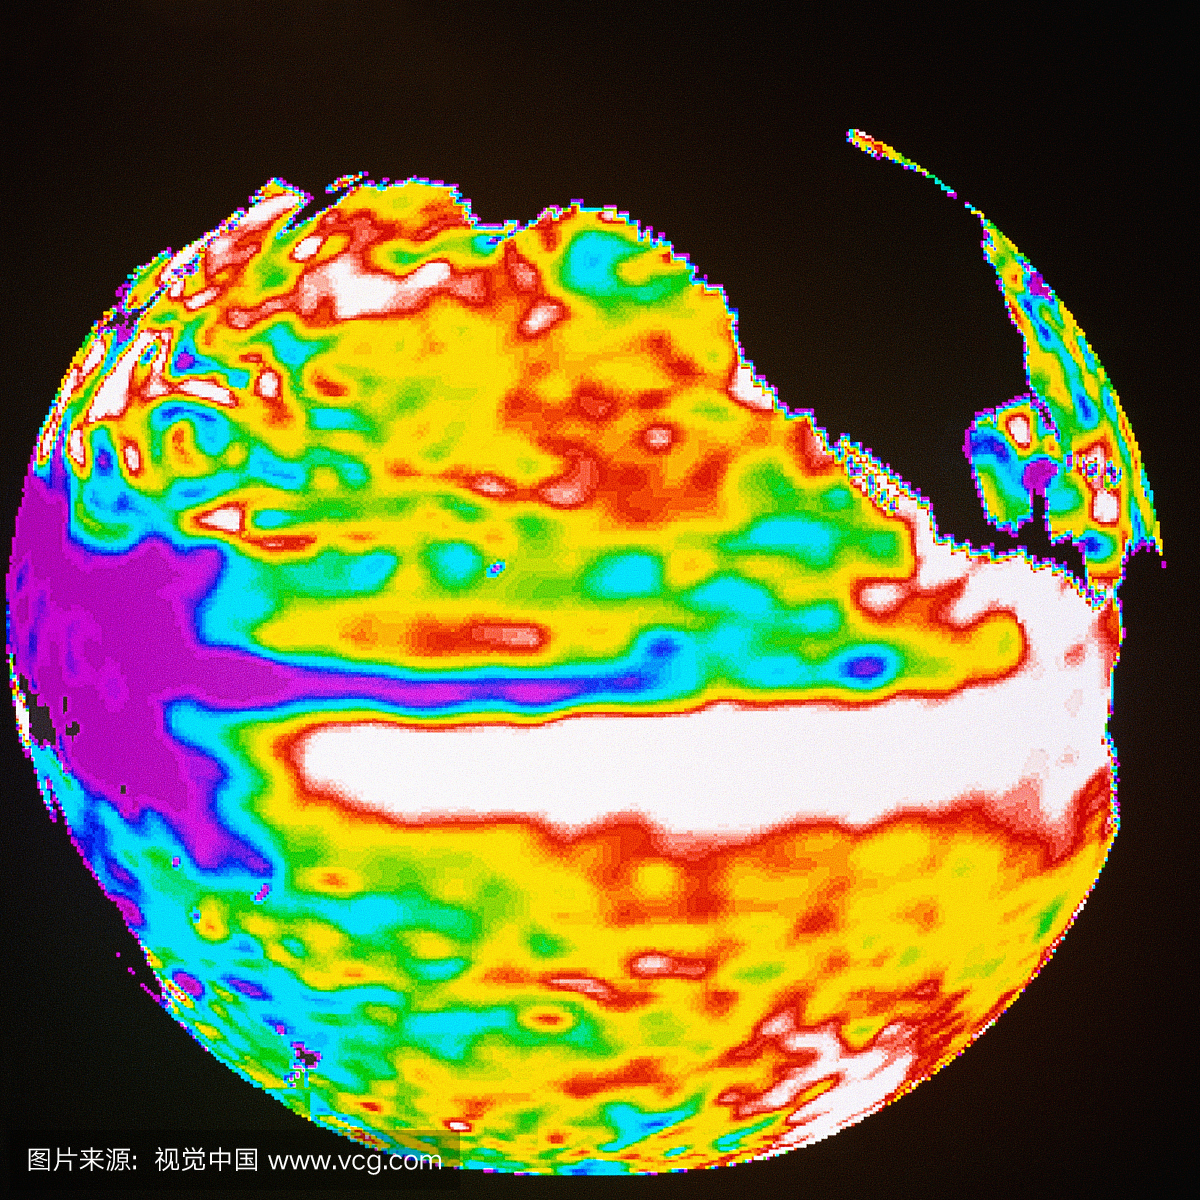 Digital Image of El Nino